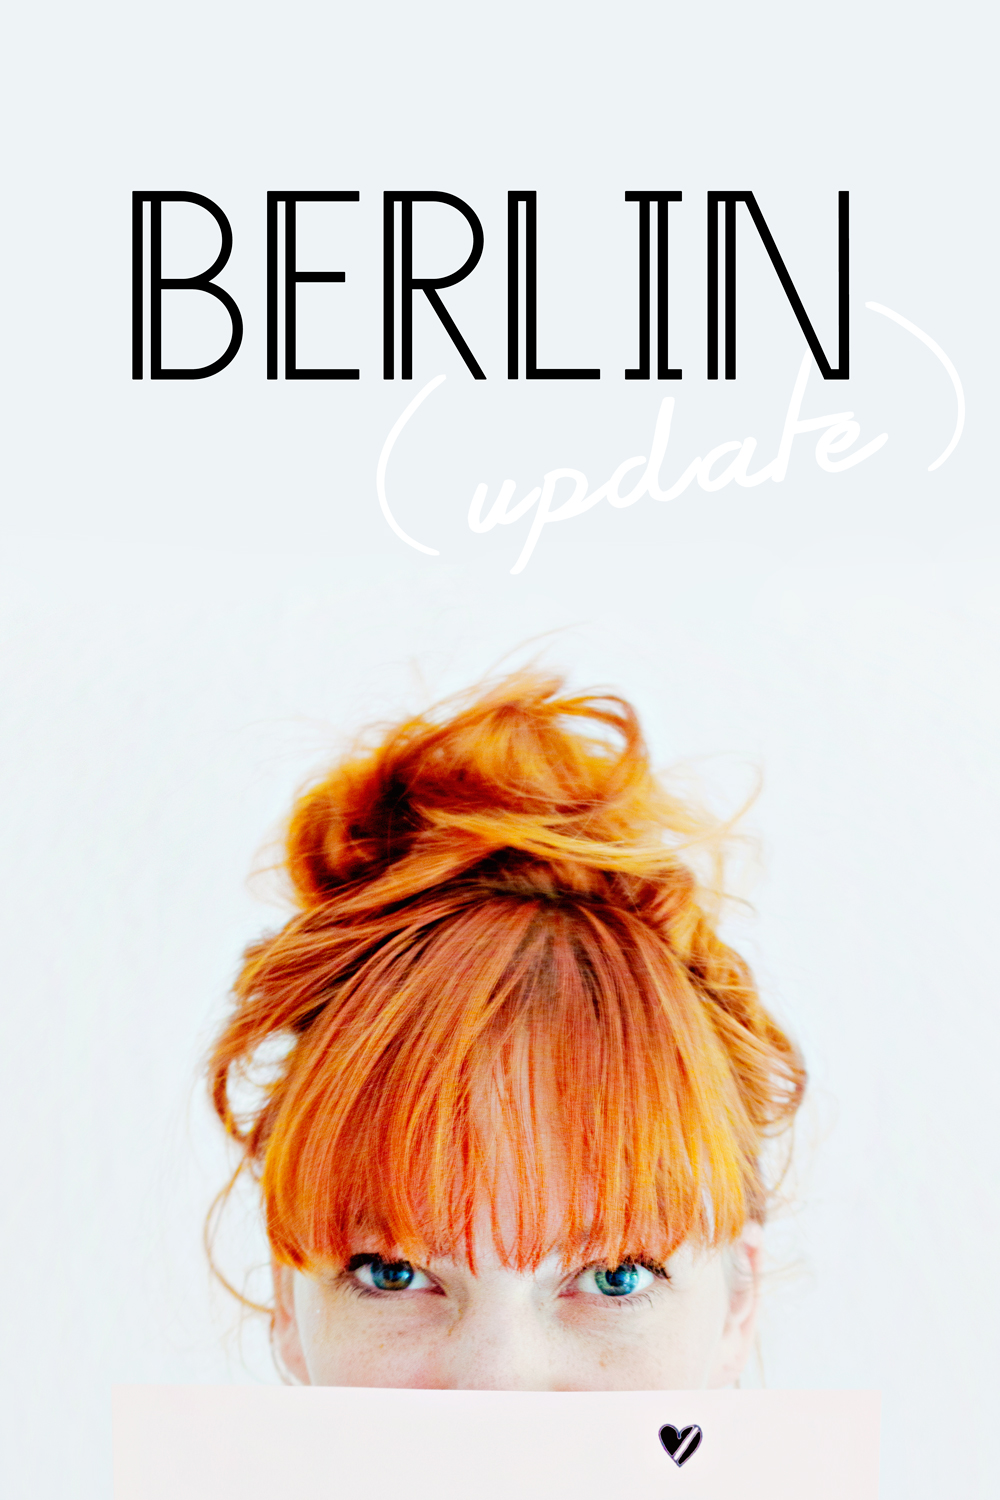 BERLIN | Update